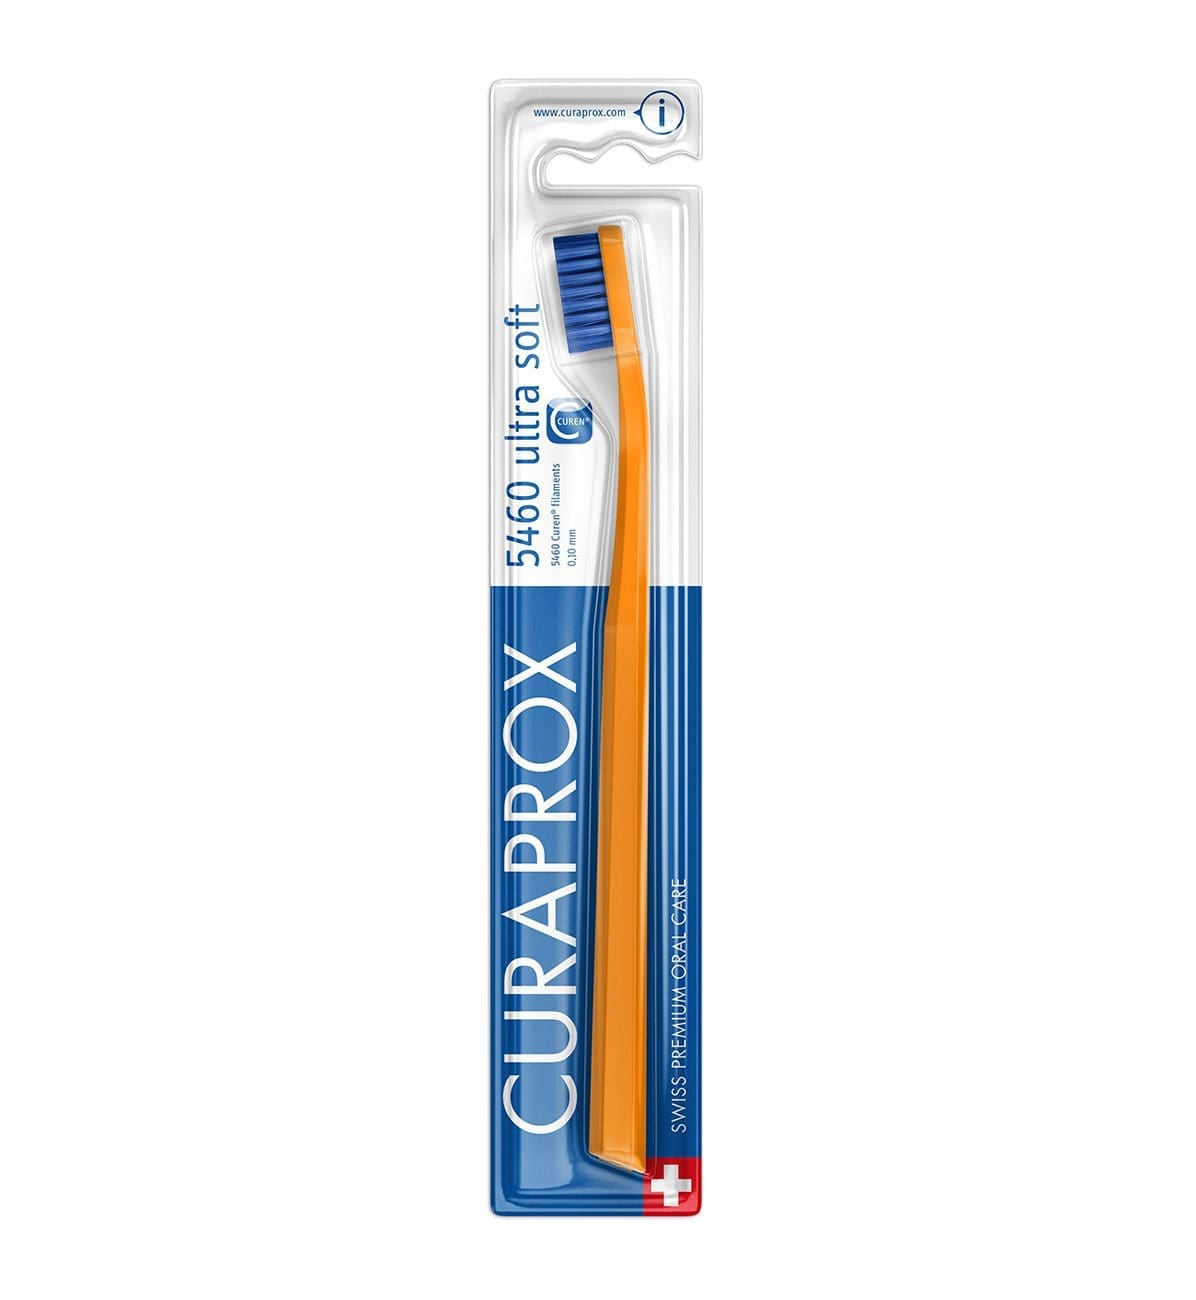 Curaprox Cs 5460 Ultra Soft Toothbrush